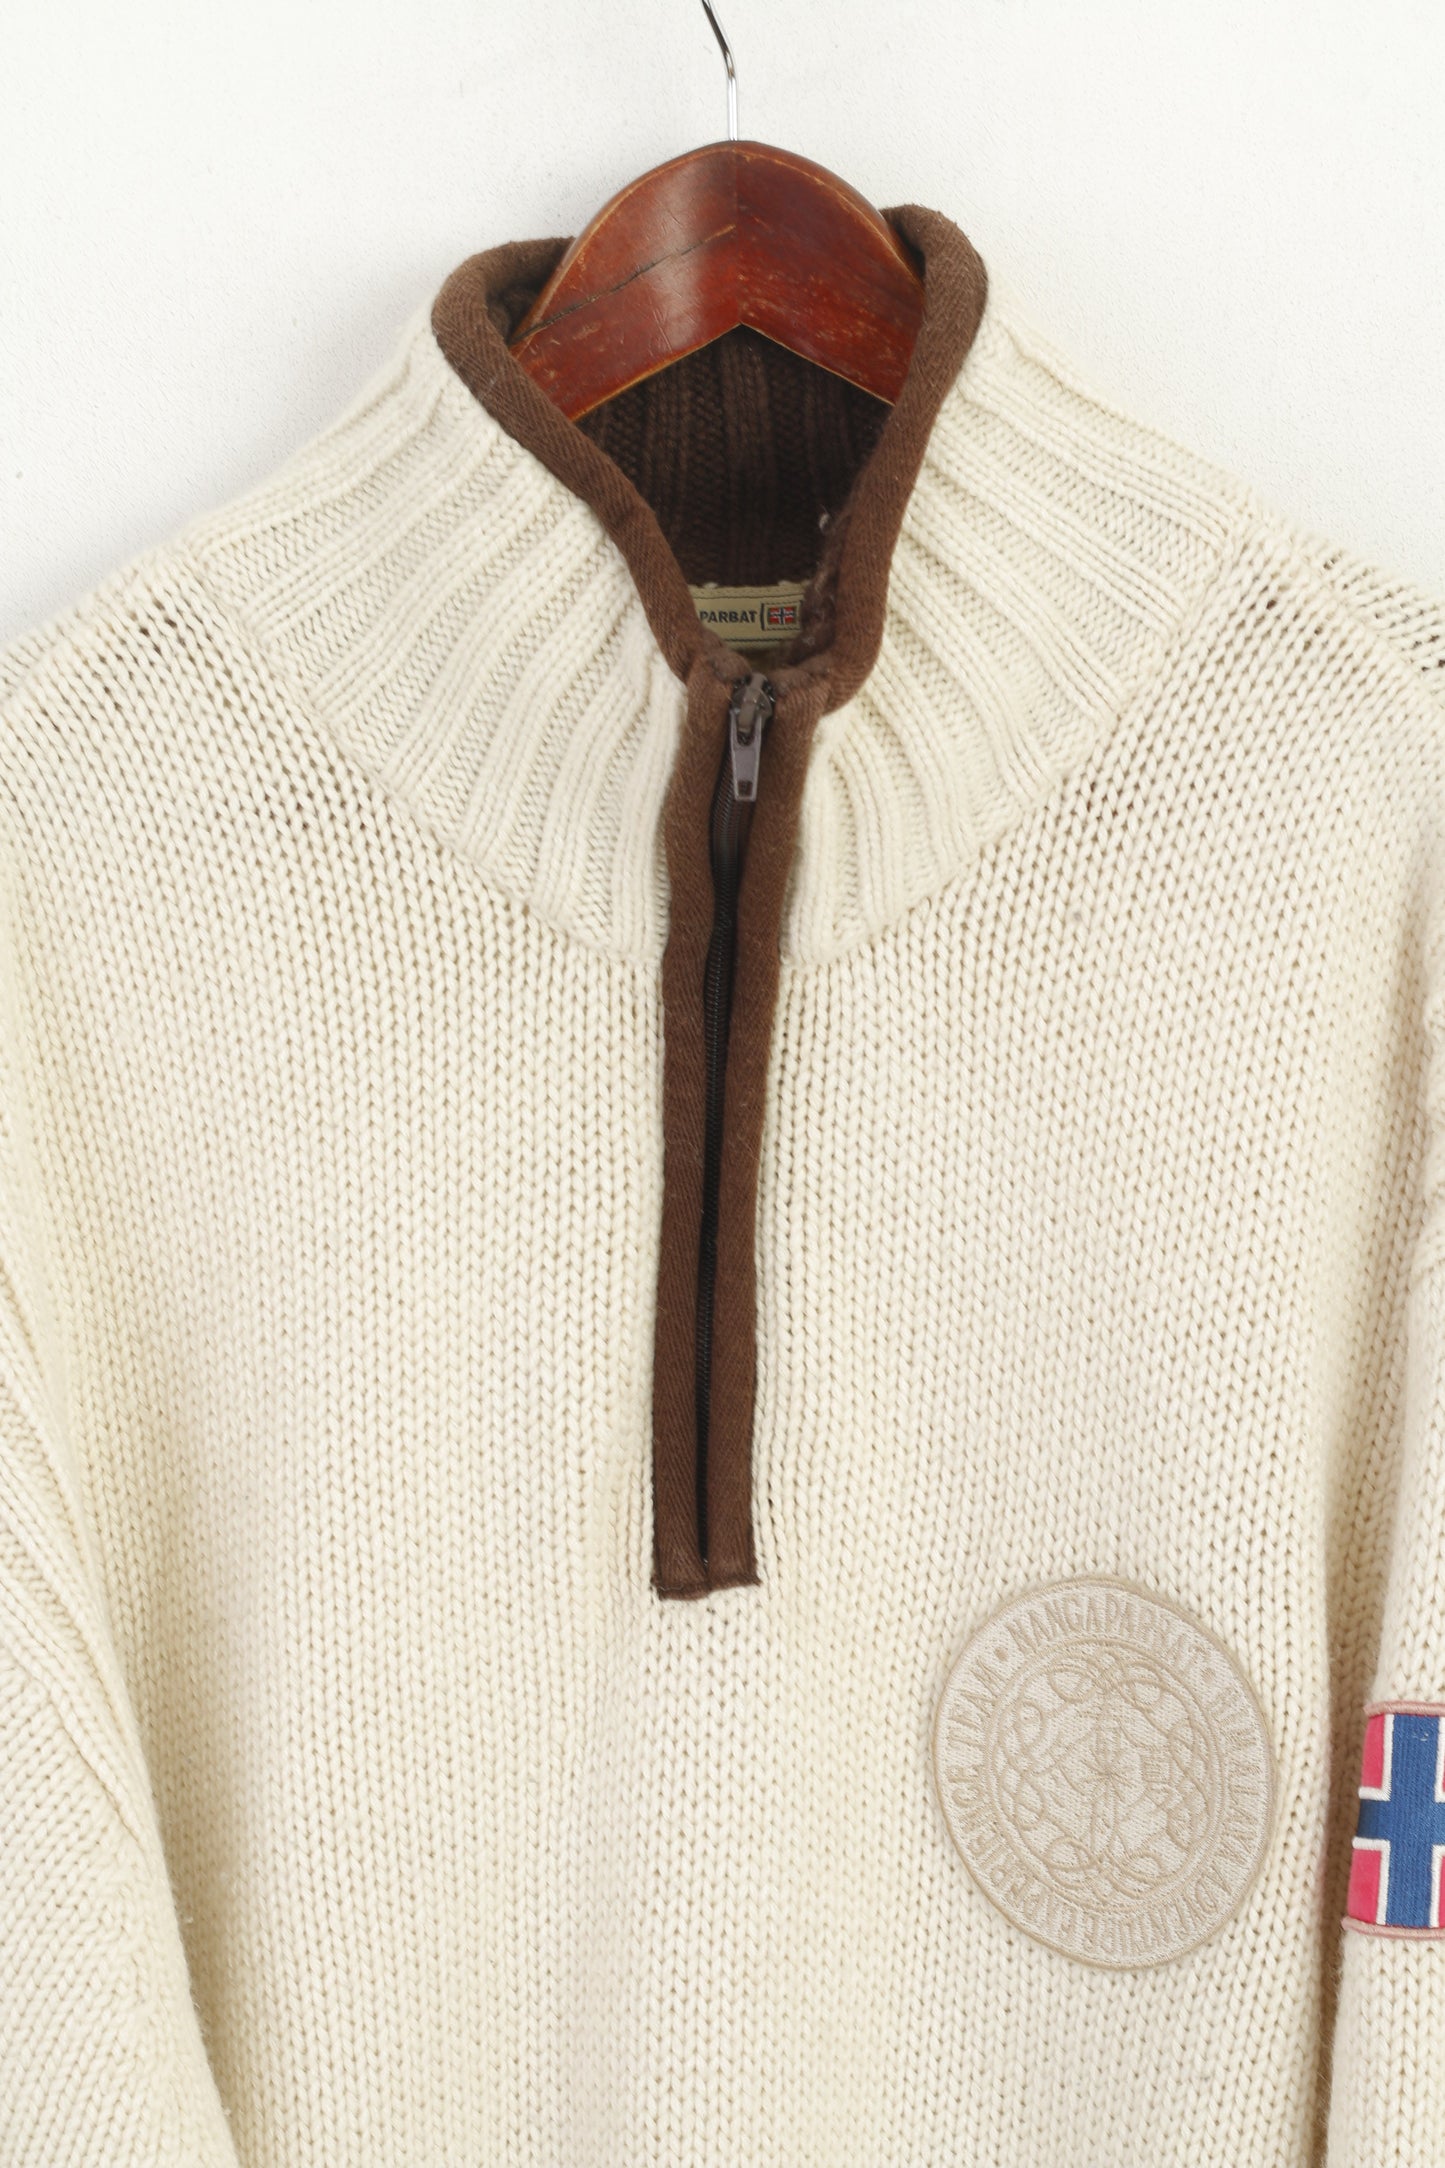 Nangaparbat Men 50/52 XXXL Jumper Beige Knitt Himalaya Zip Neck Classic Sweater